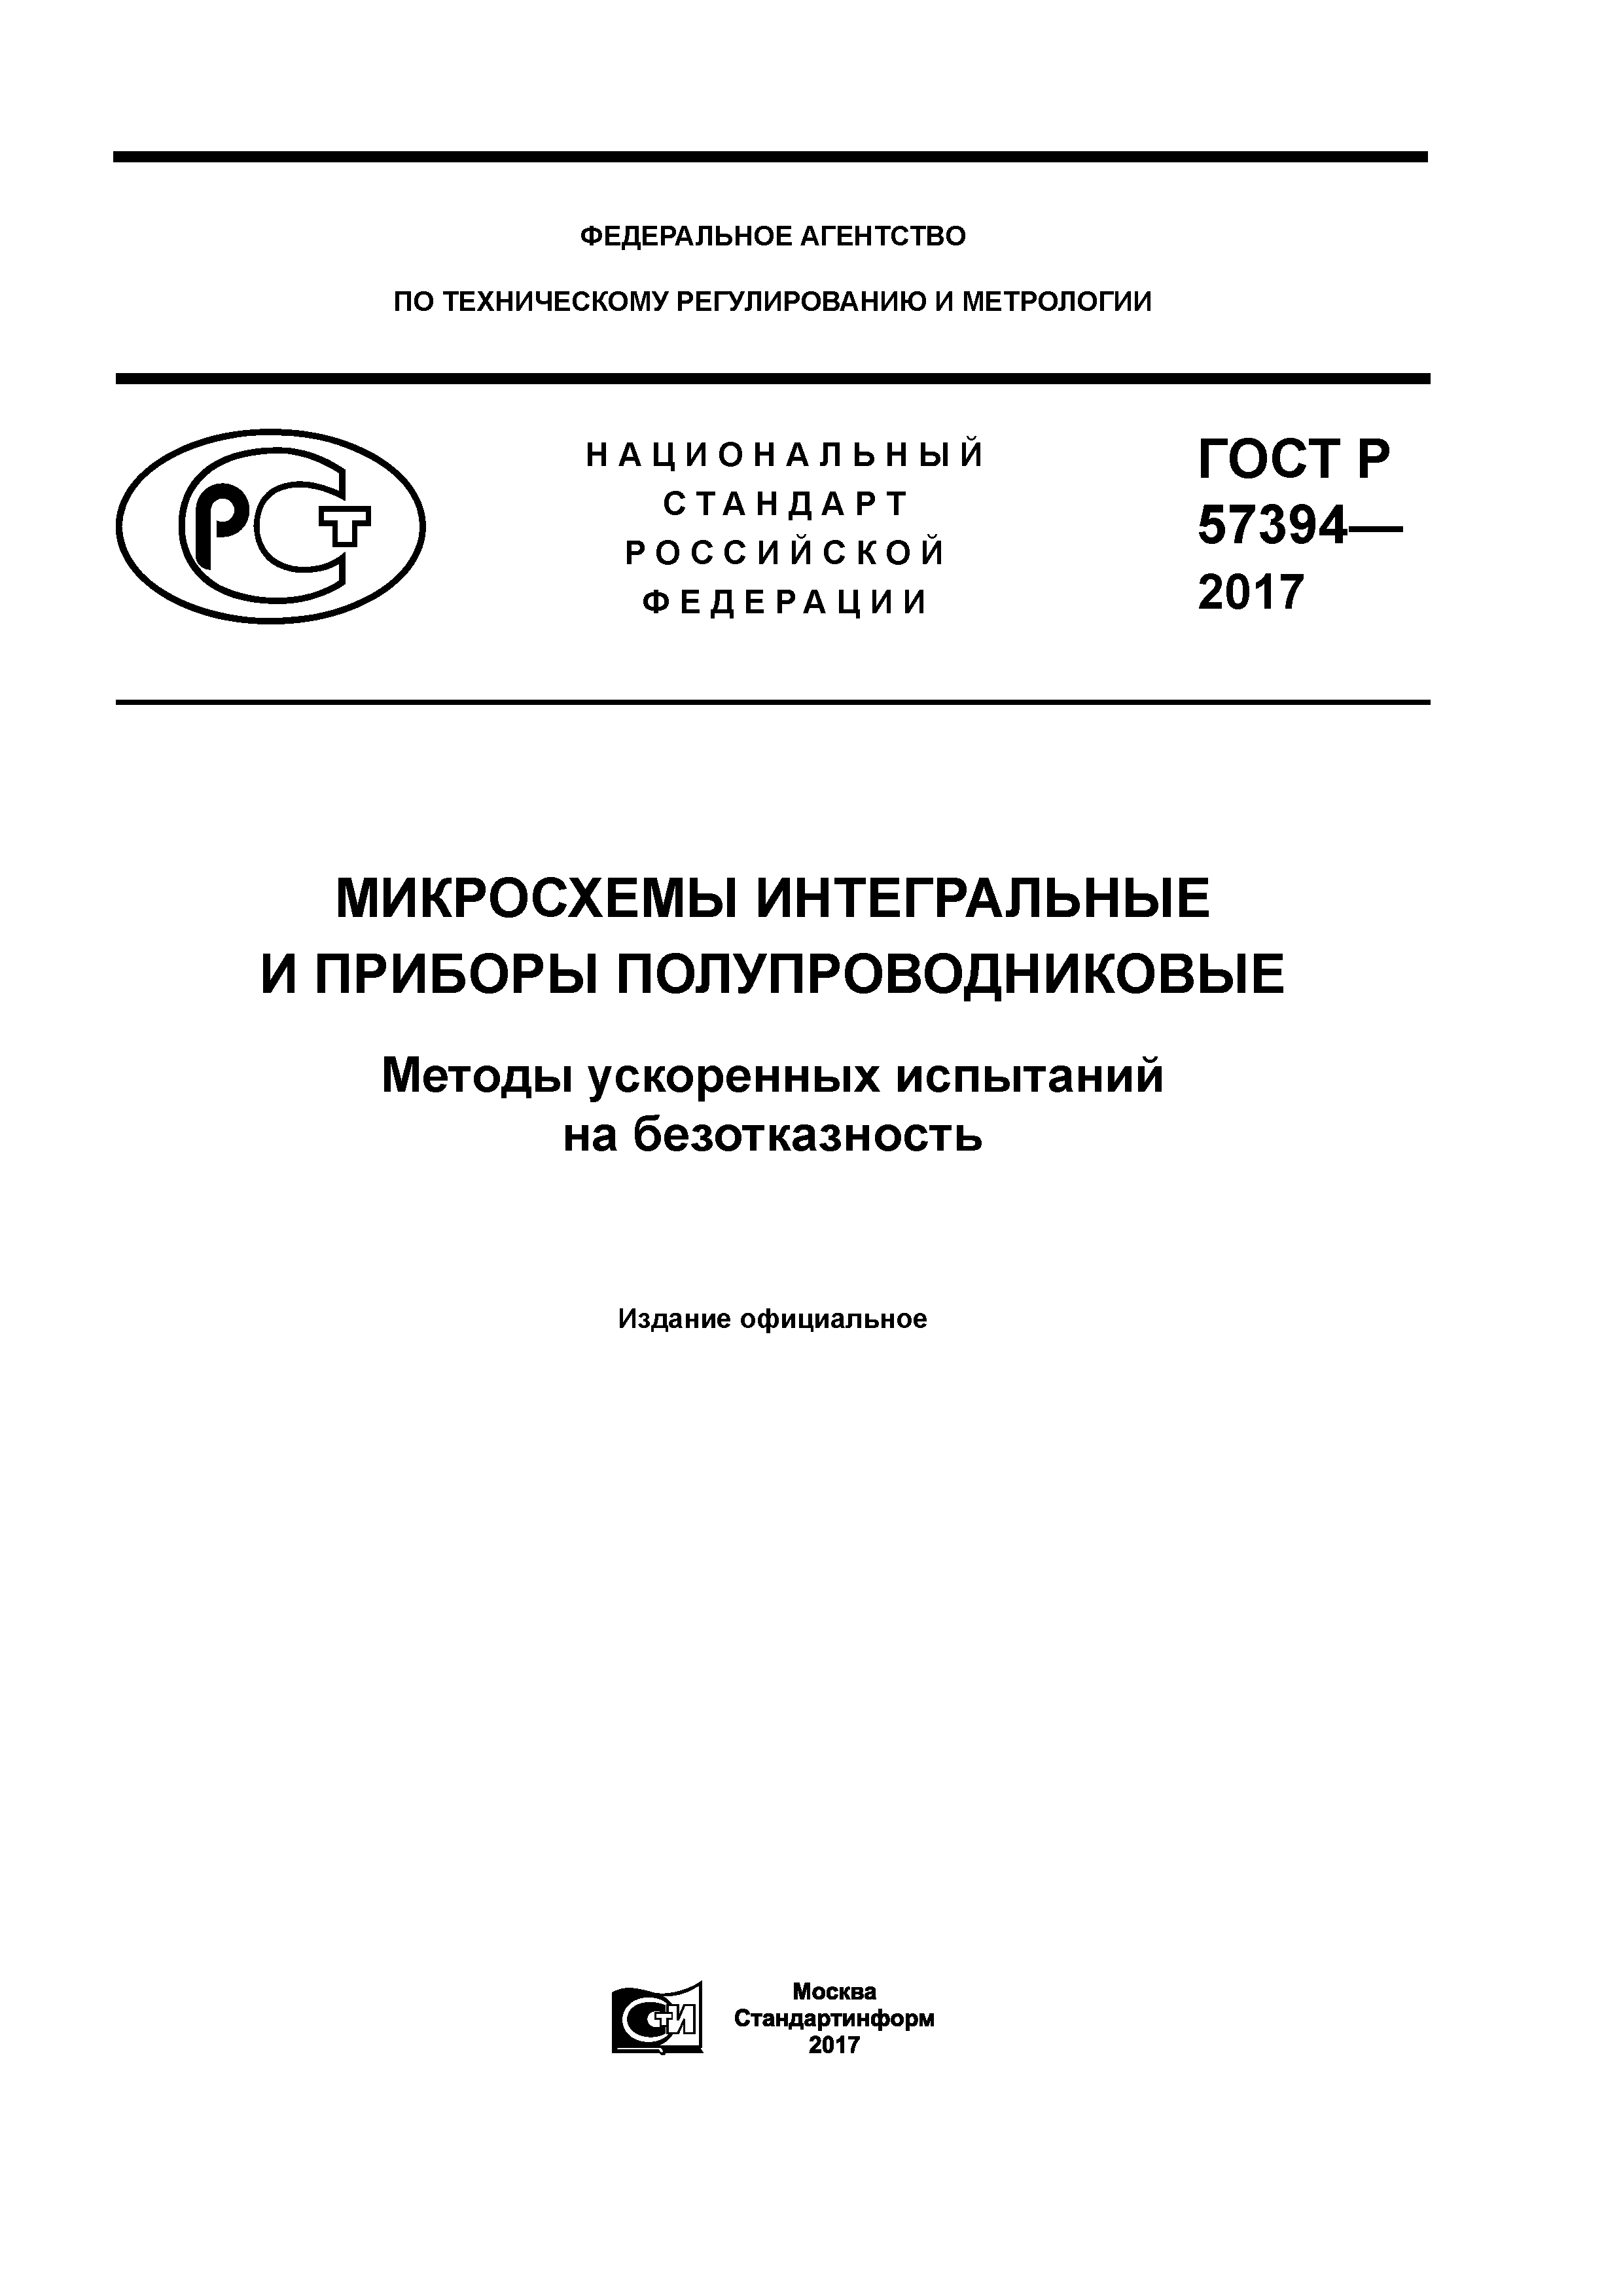 ГОСТ Р 57394-2017